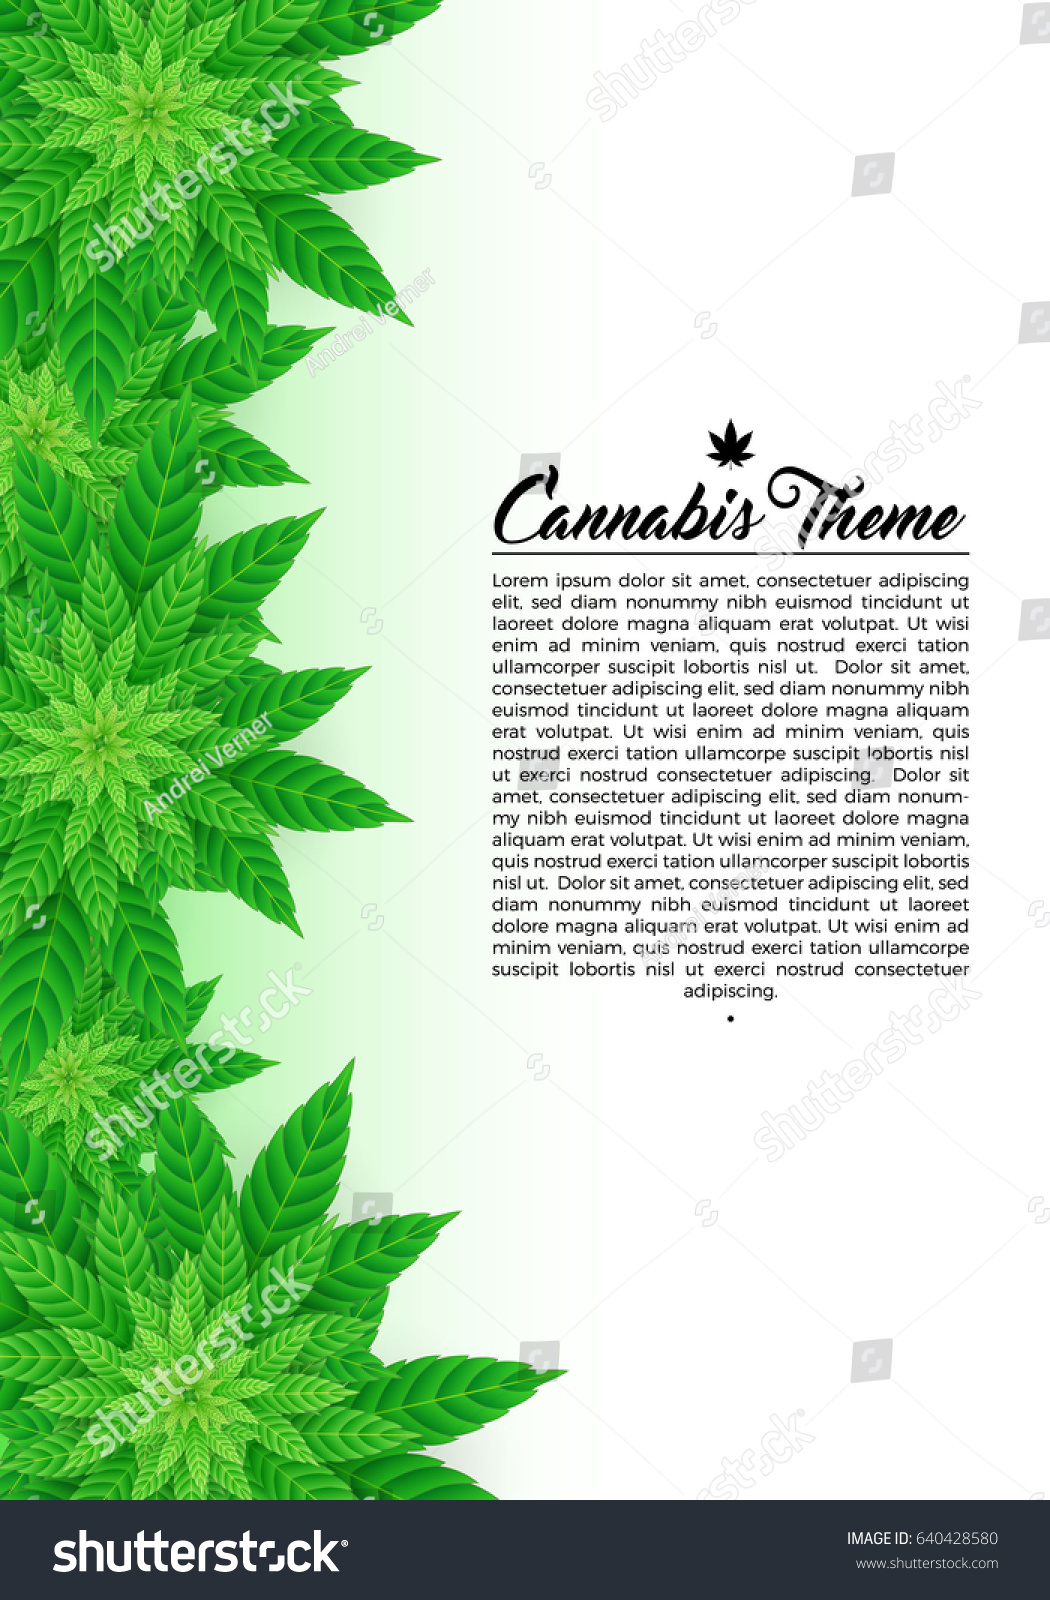 marijuana-cannabis-420-flyer-poster-template-stock-vector-royalty-free